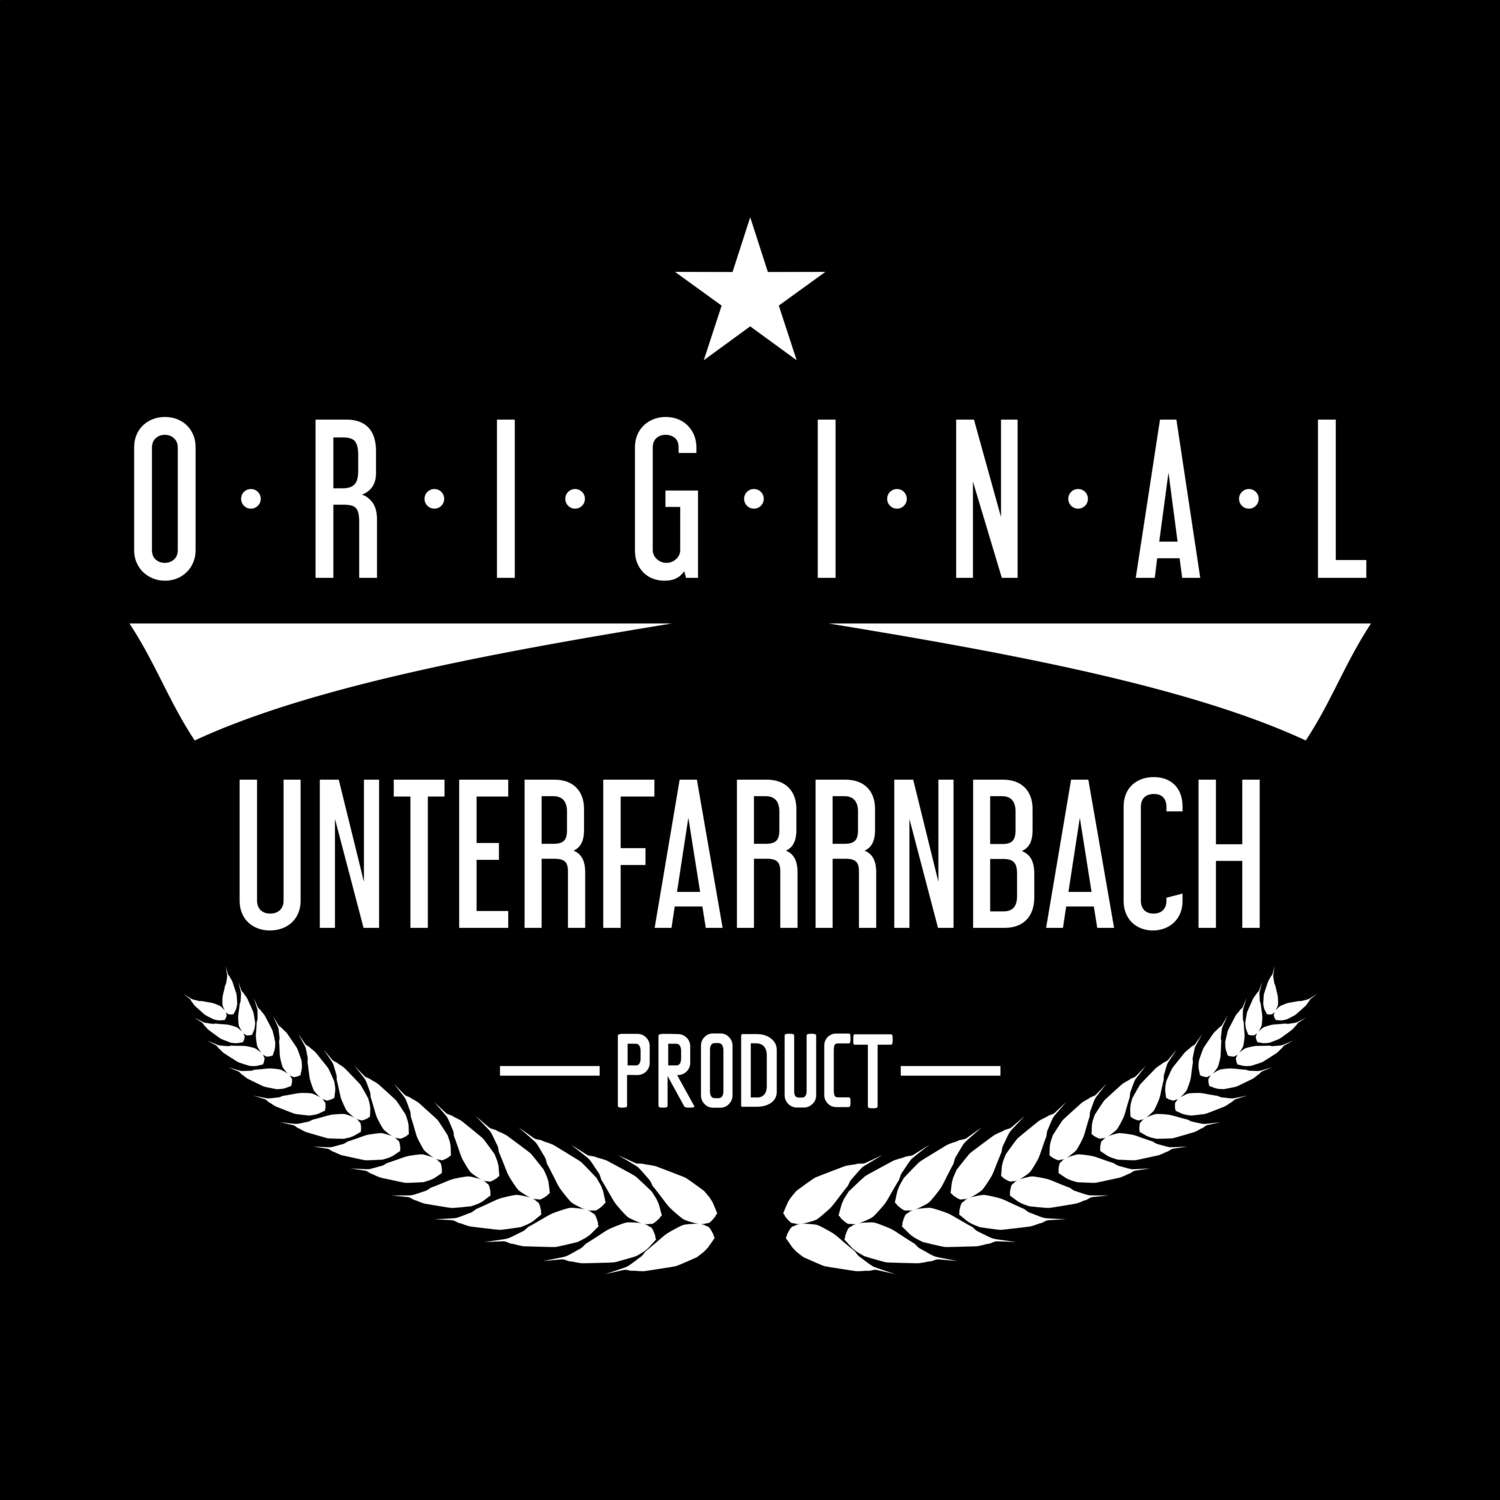 Unterfarrnbach T-Shirt »Original Product«